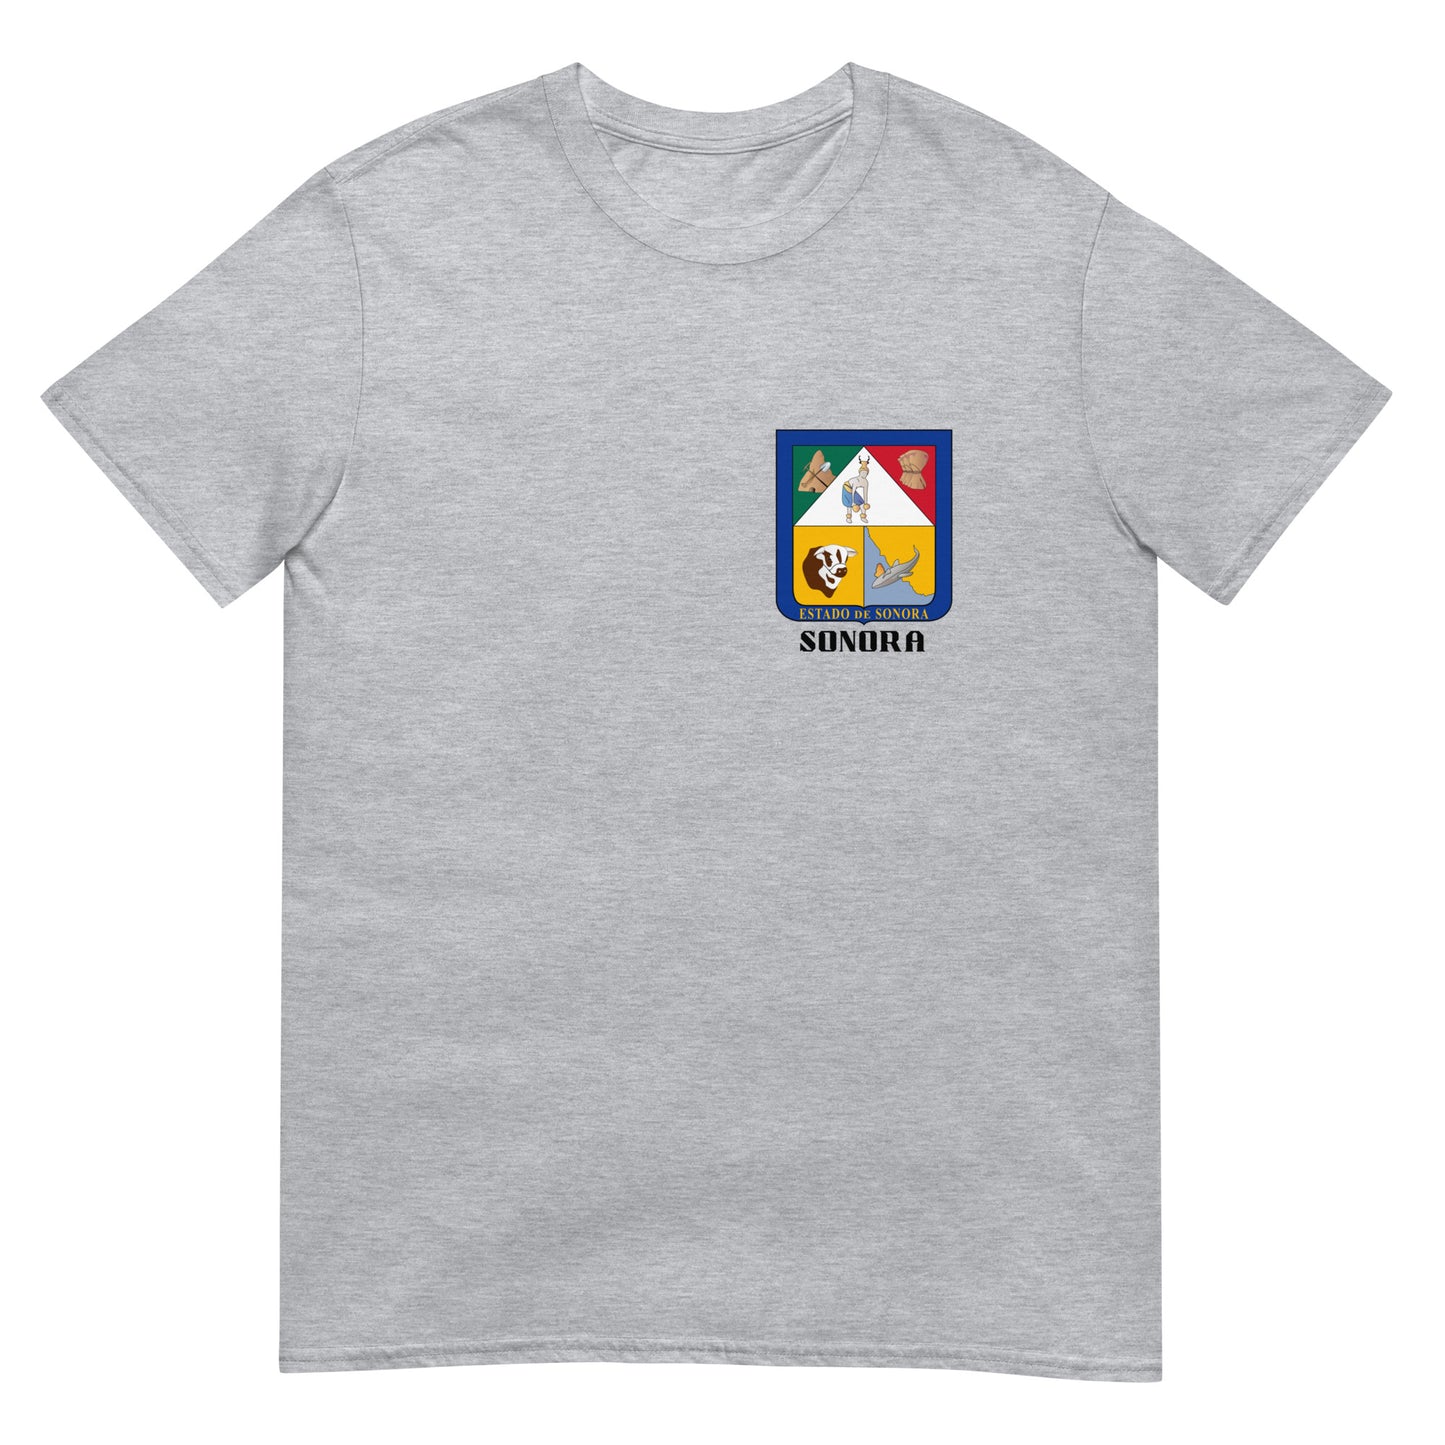 Sonora- T-Shirt